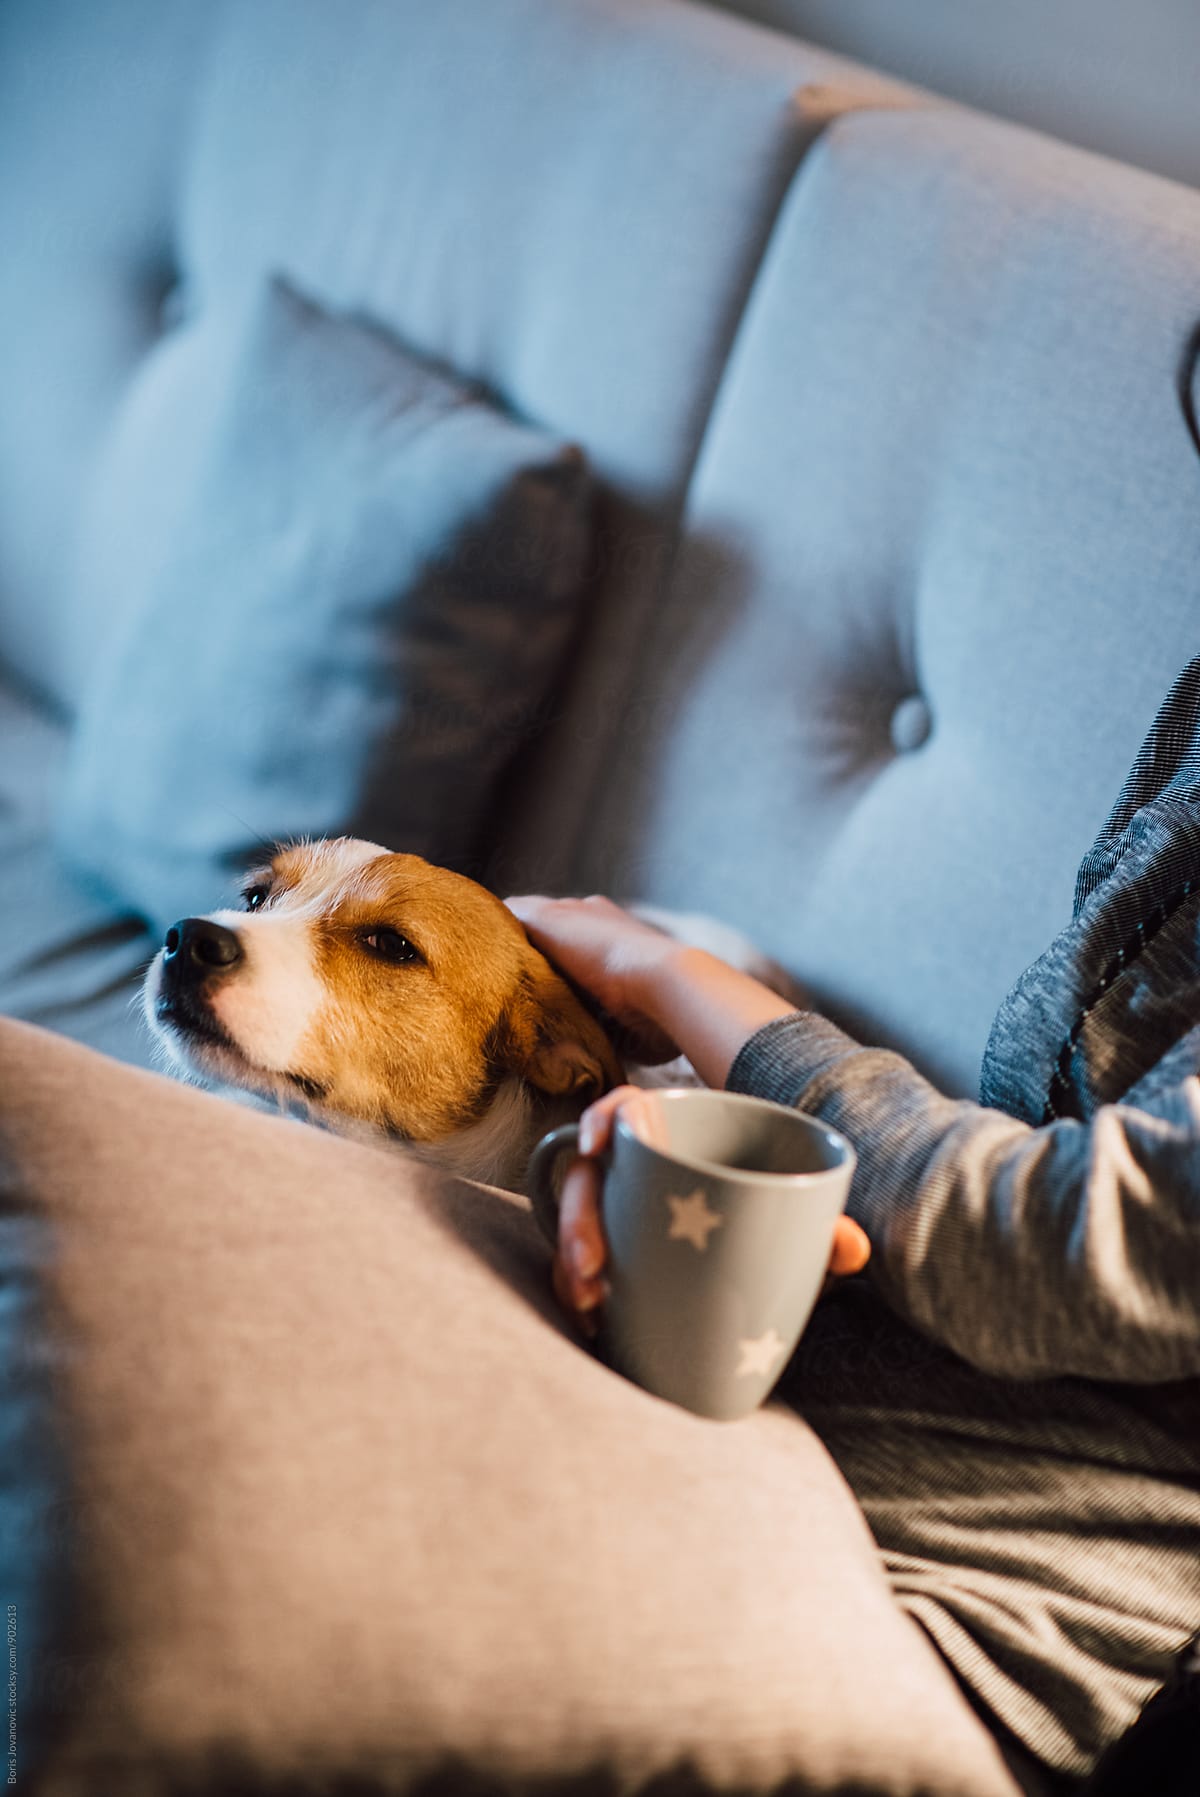 Woman cuddling a dog and drinking tea